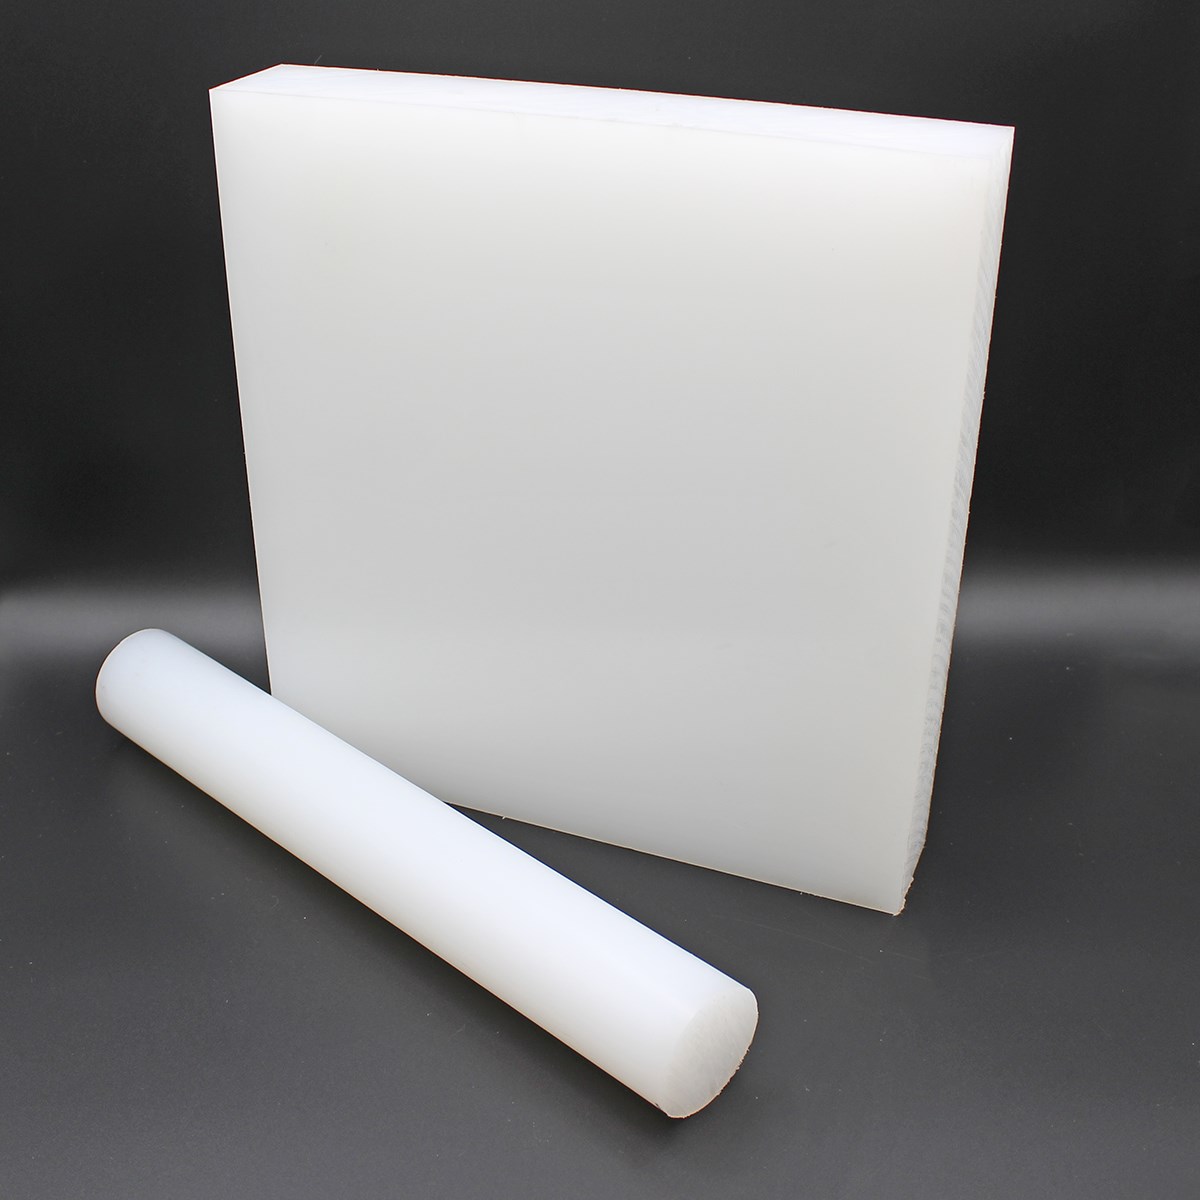 3 Width Opaque Off-White Standard Tolerance Low Density Polyethylene 4 Length 1 Thickness Rectangular Bar LDPE 